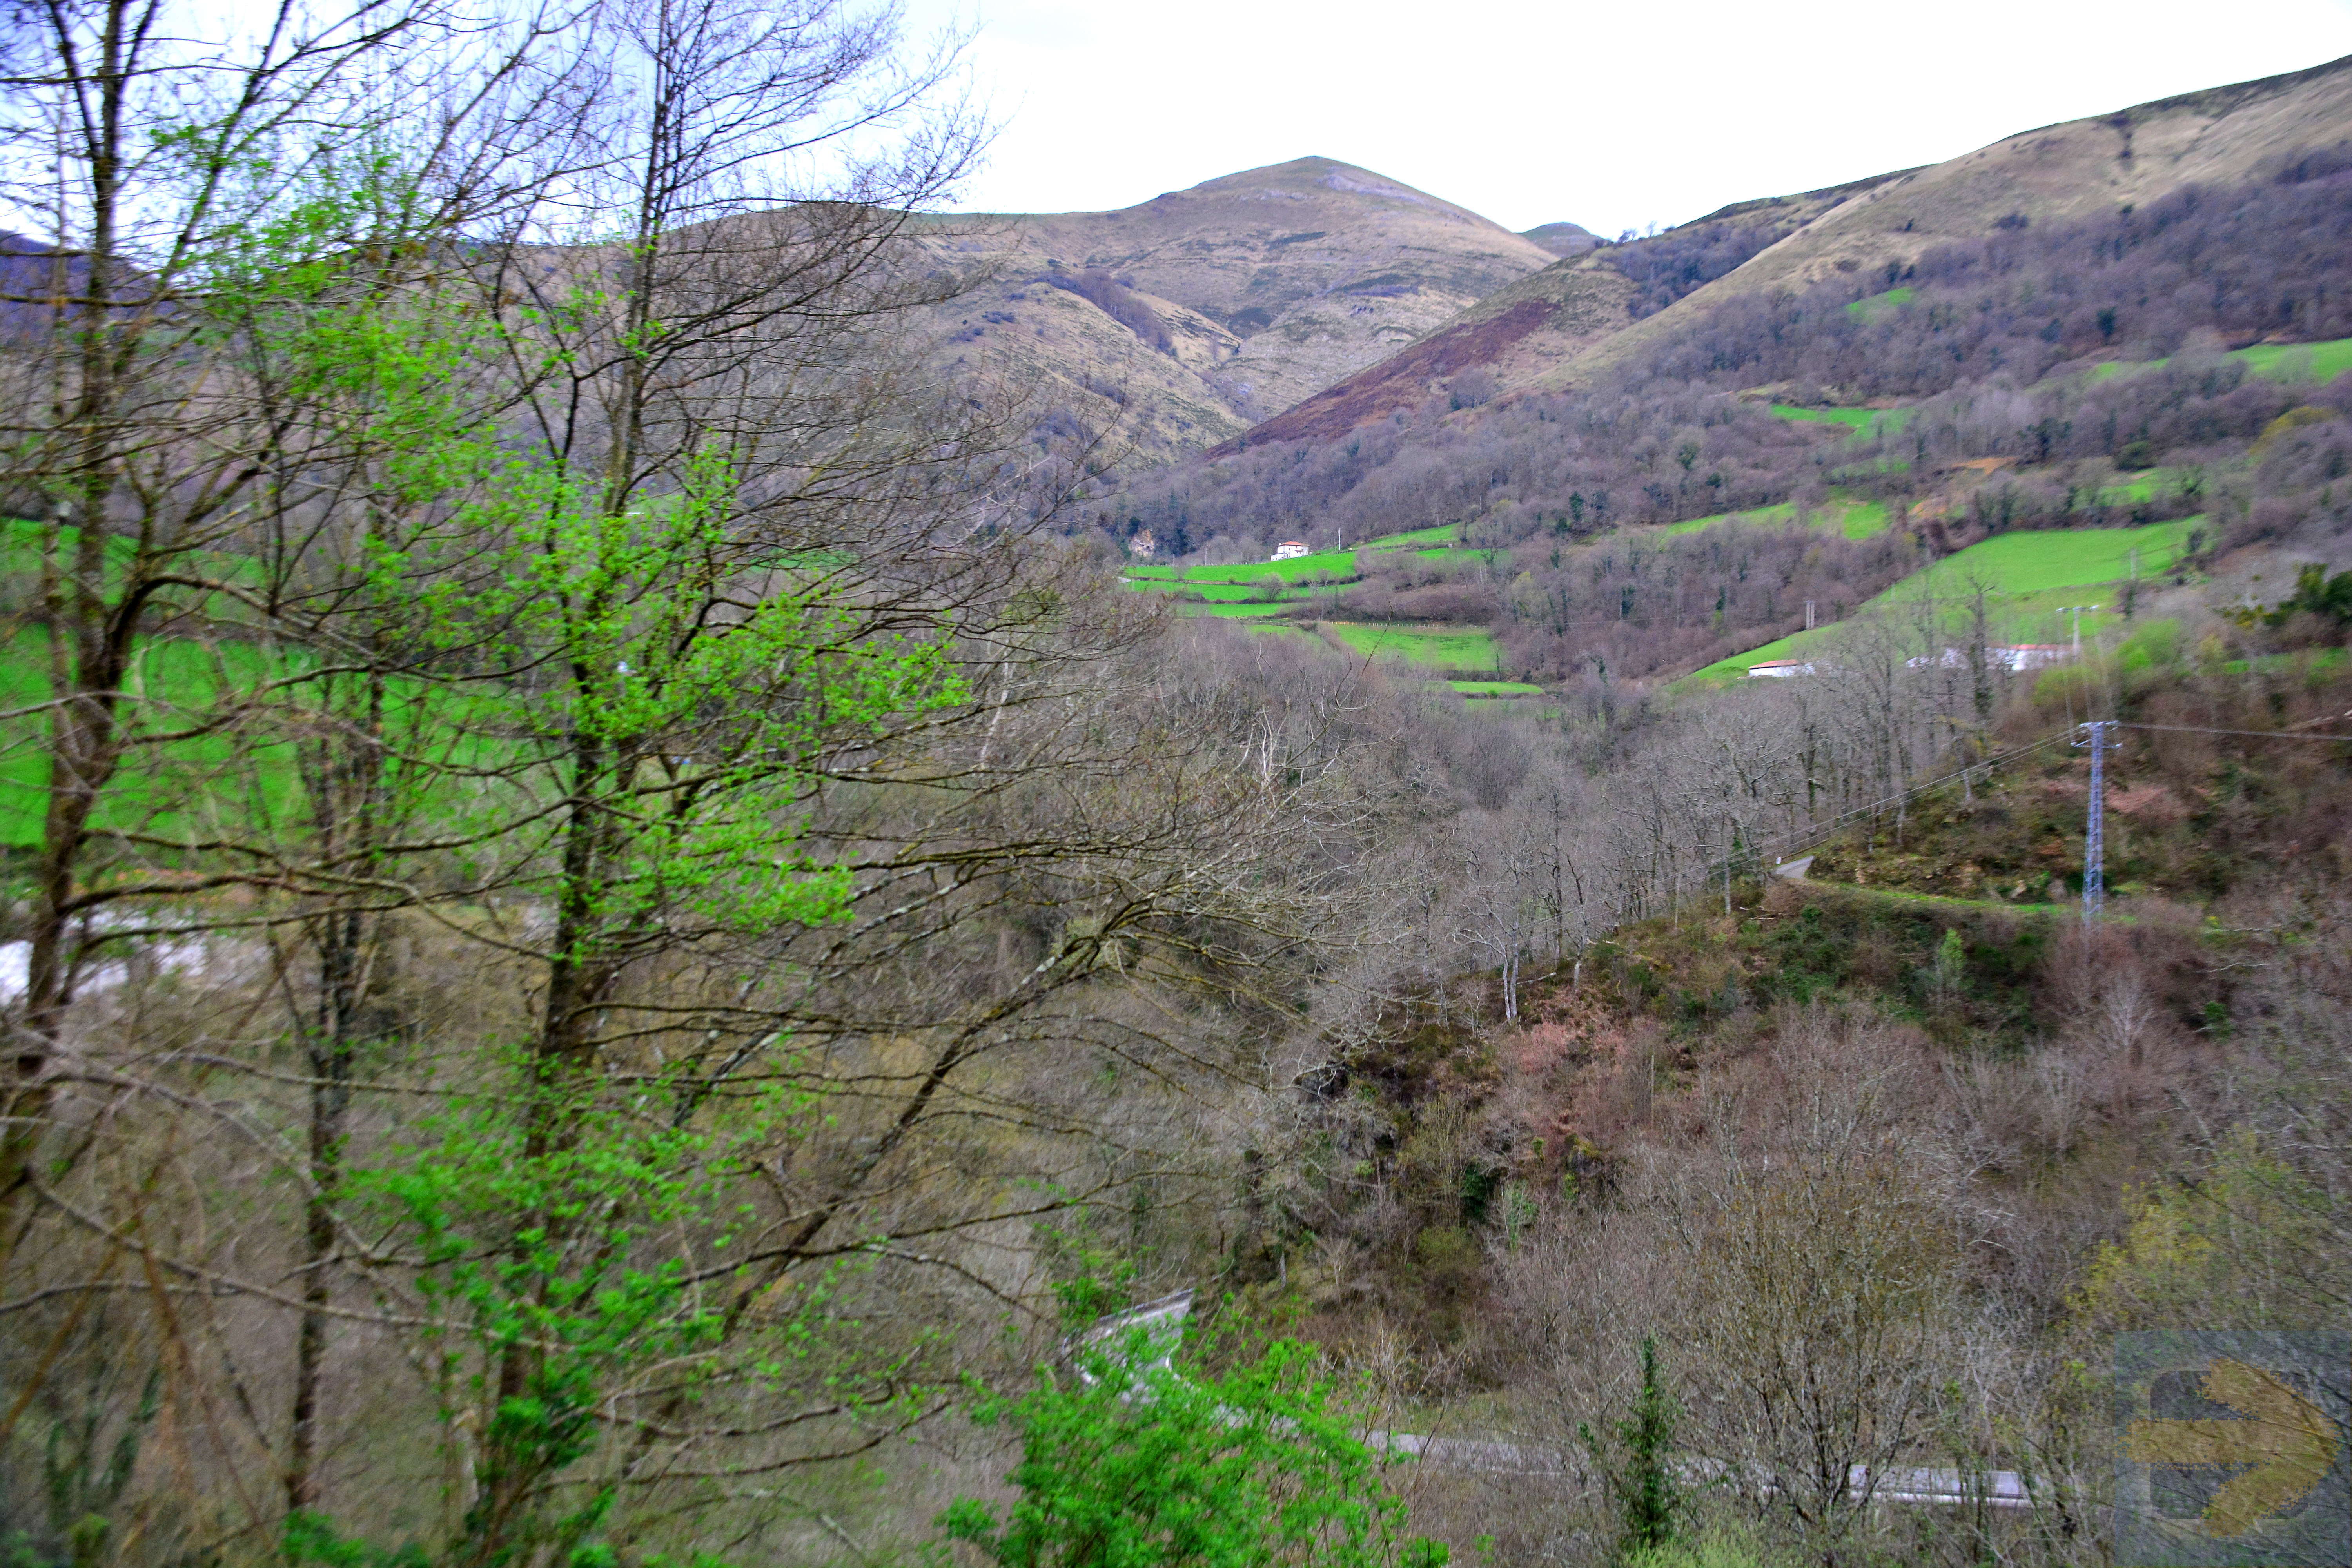 Rural scene on the route to Valcarlos in Spring - April 2016